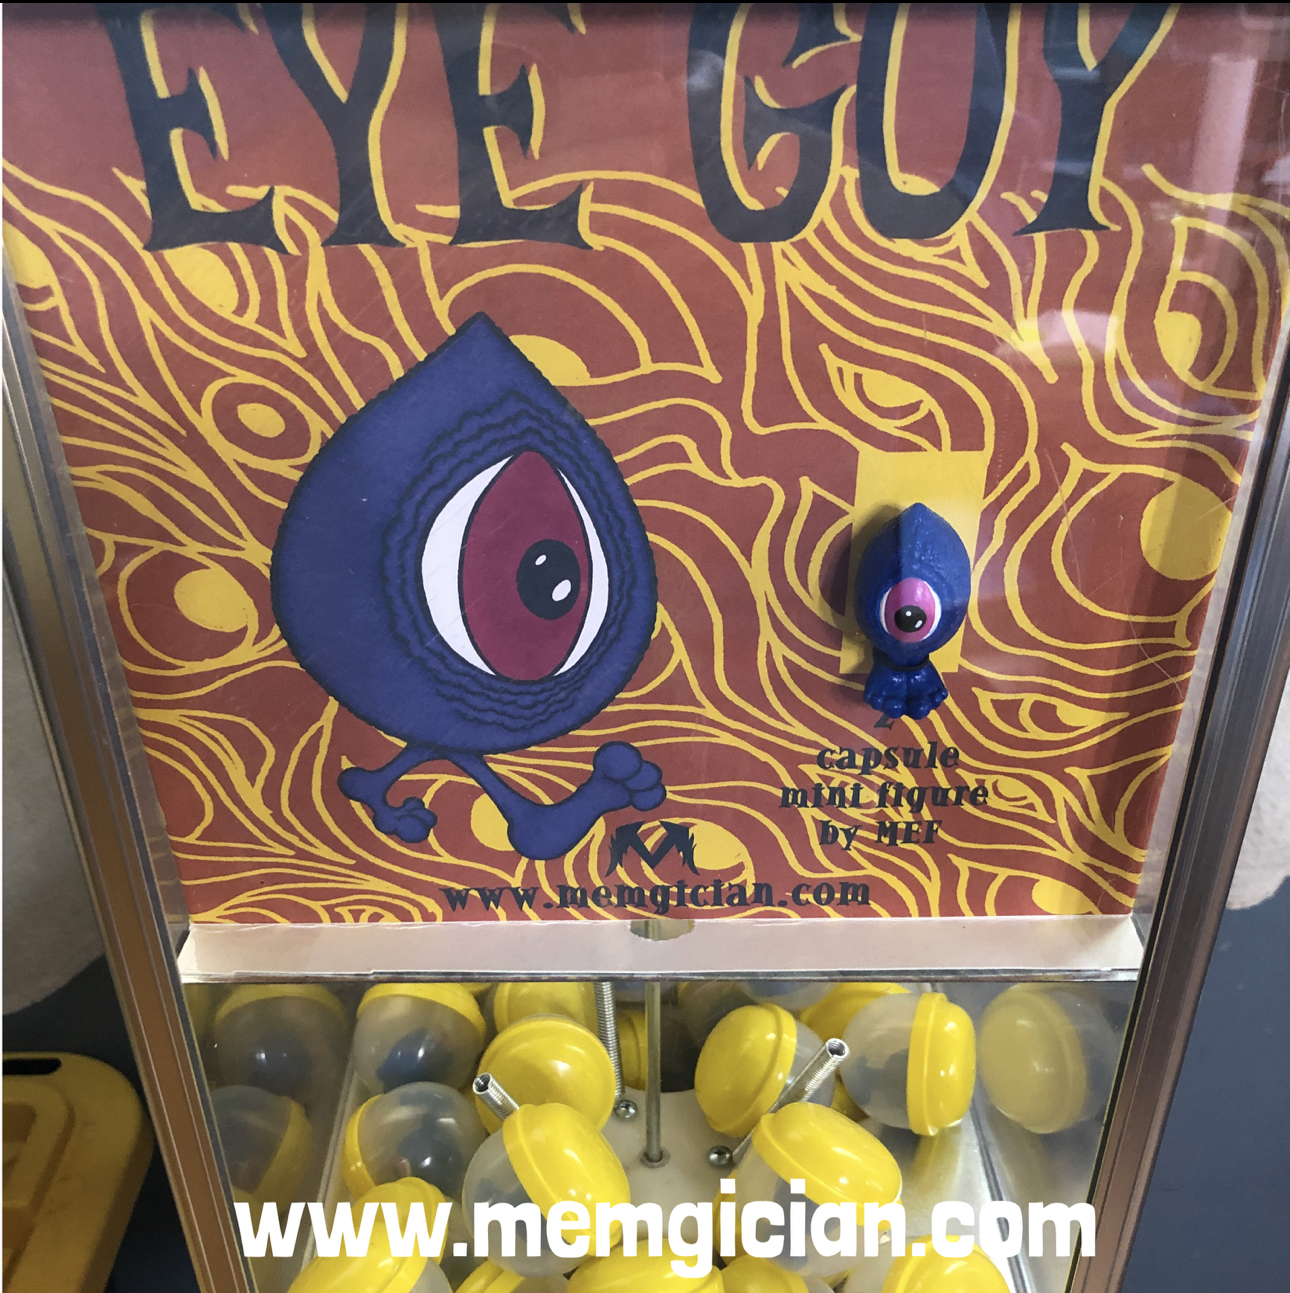 Eye Guy capsule machine